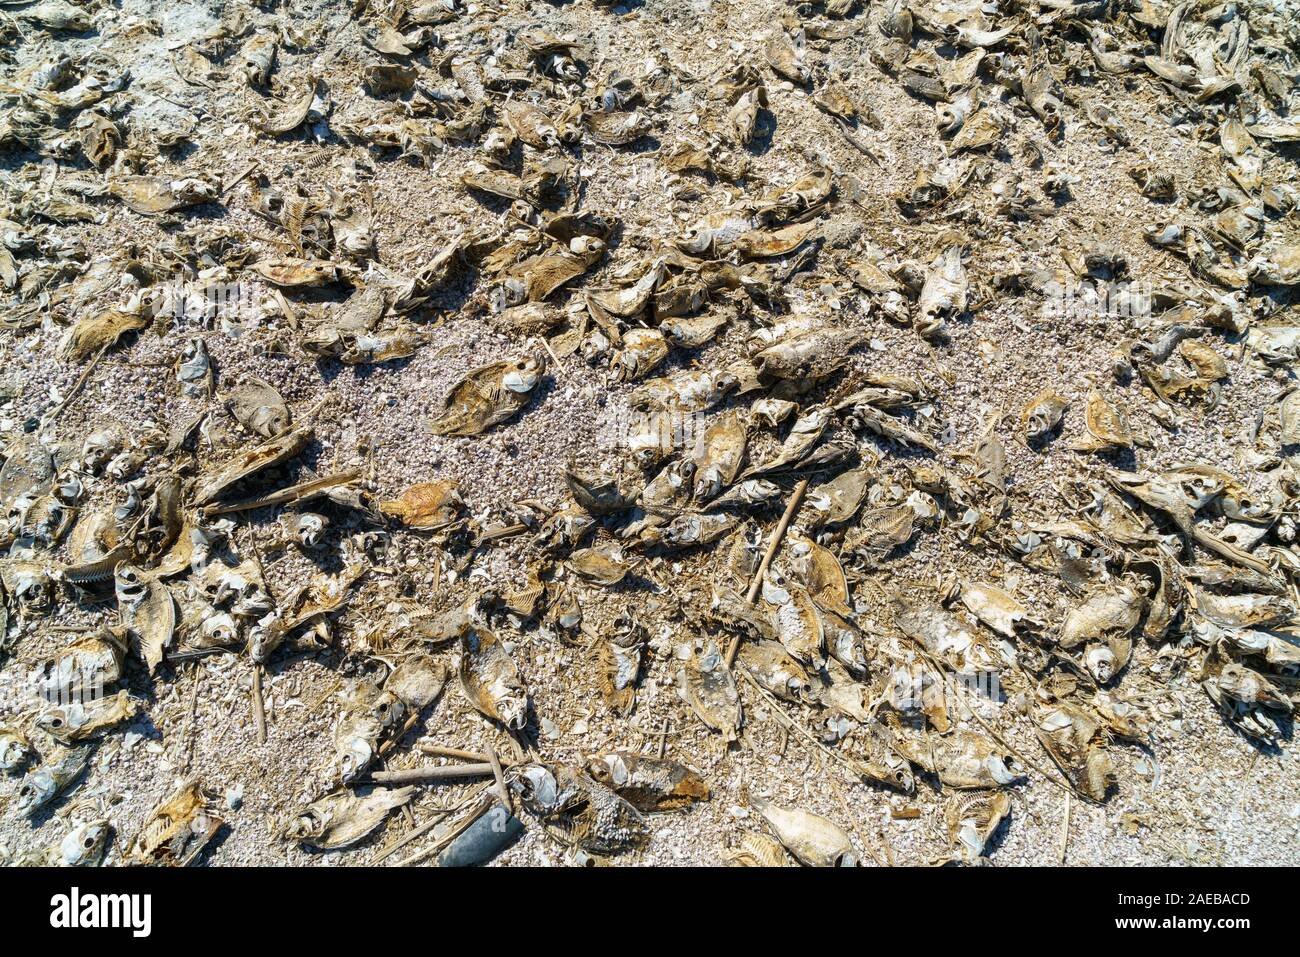 Dead fish drought lake global warming Stock Photo